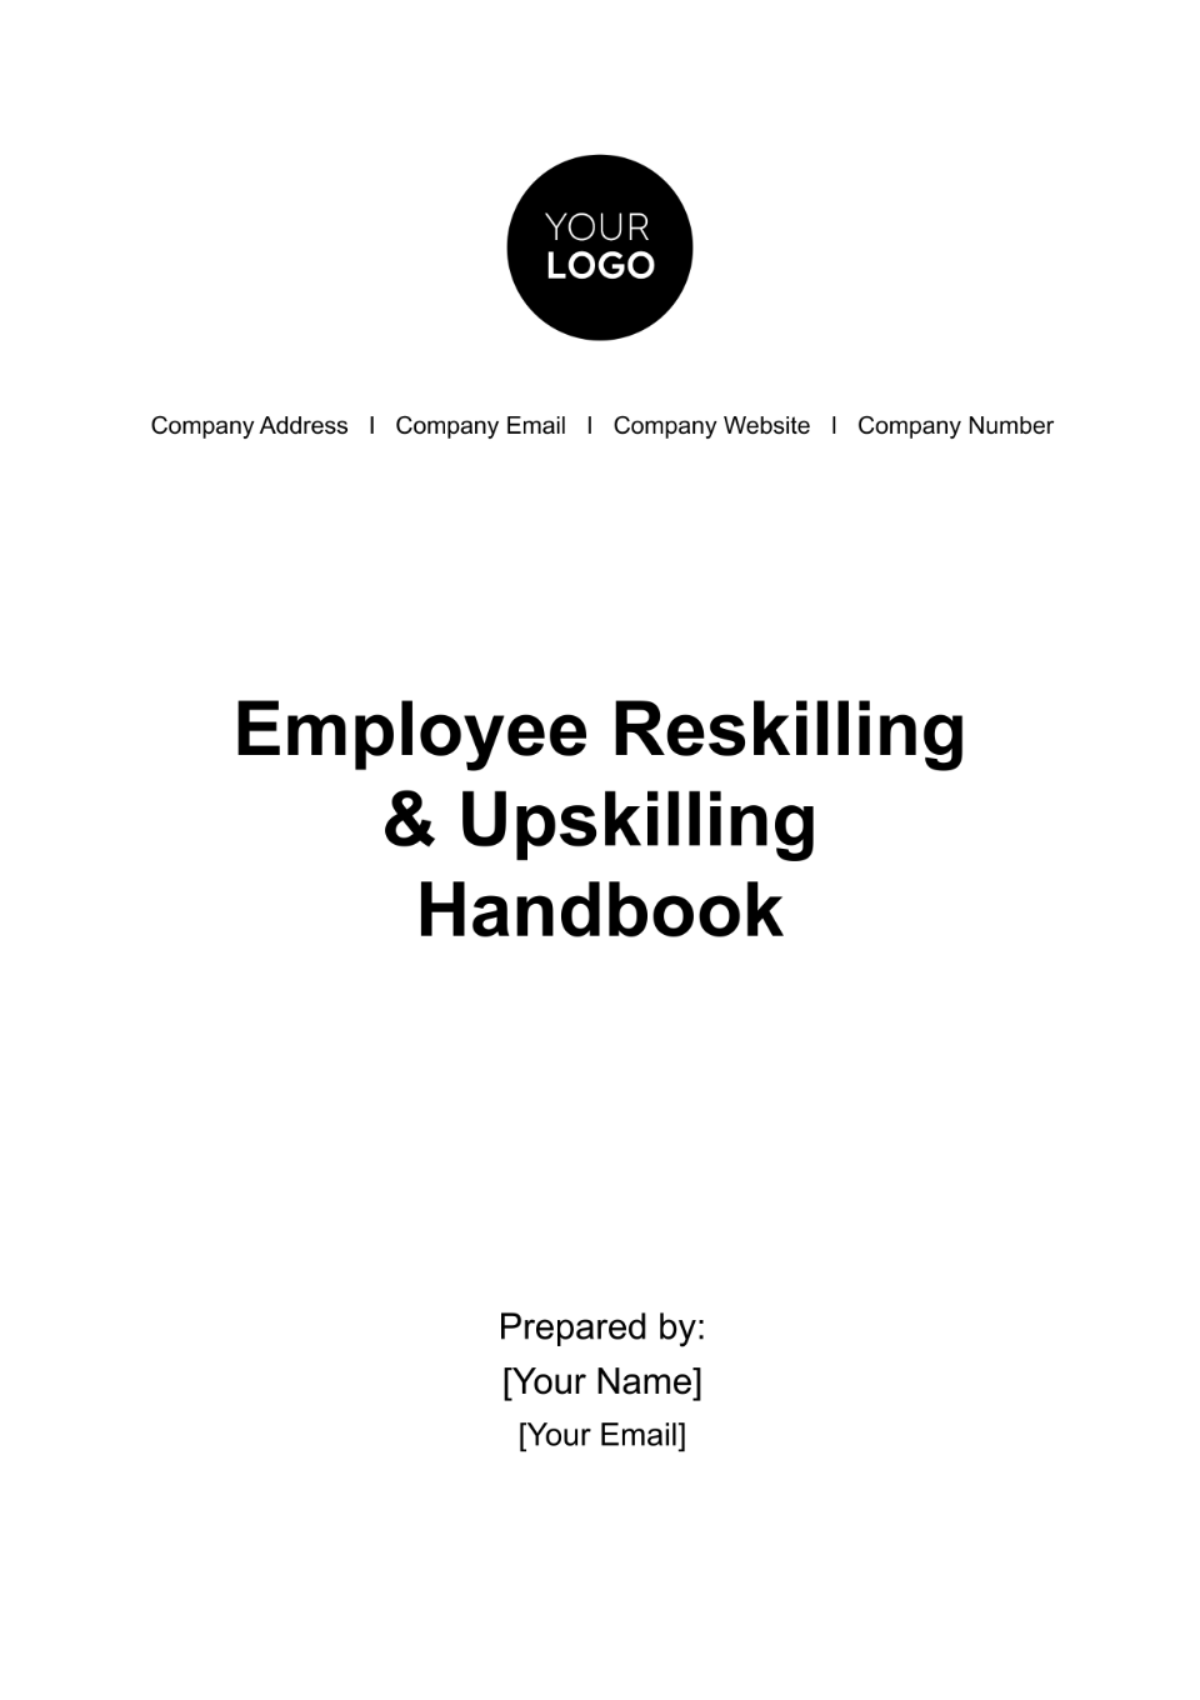 Employee Reskilling & Upskilling Handbook HR Template